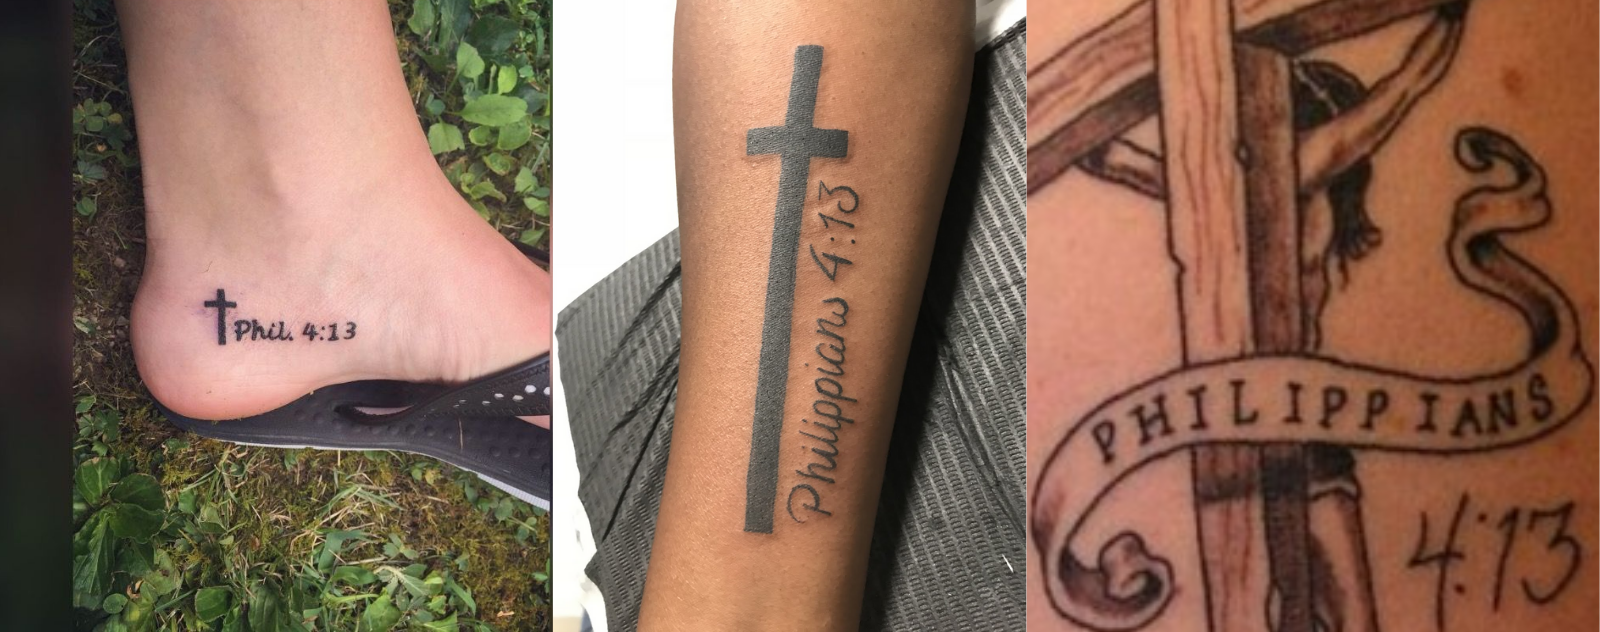 philippians-4-13-tattoo-with-cross-5